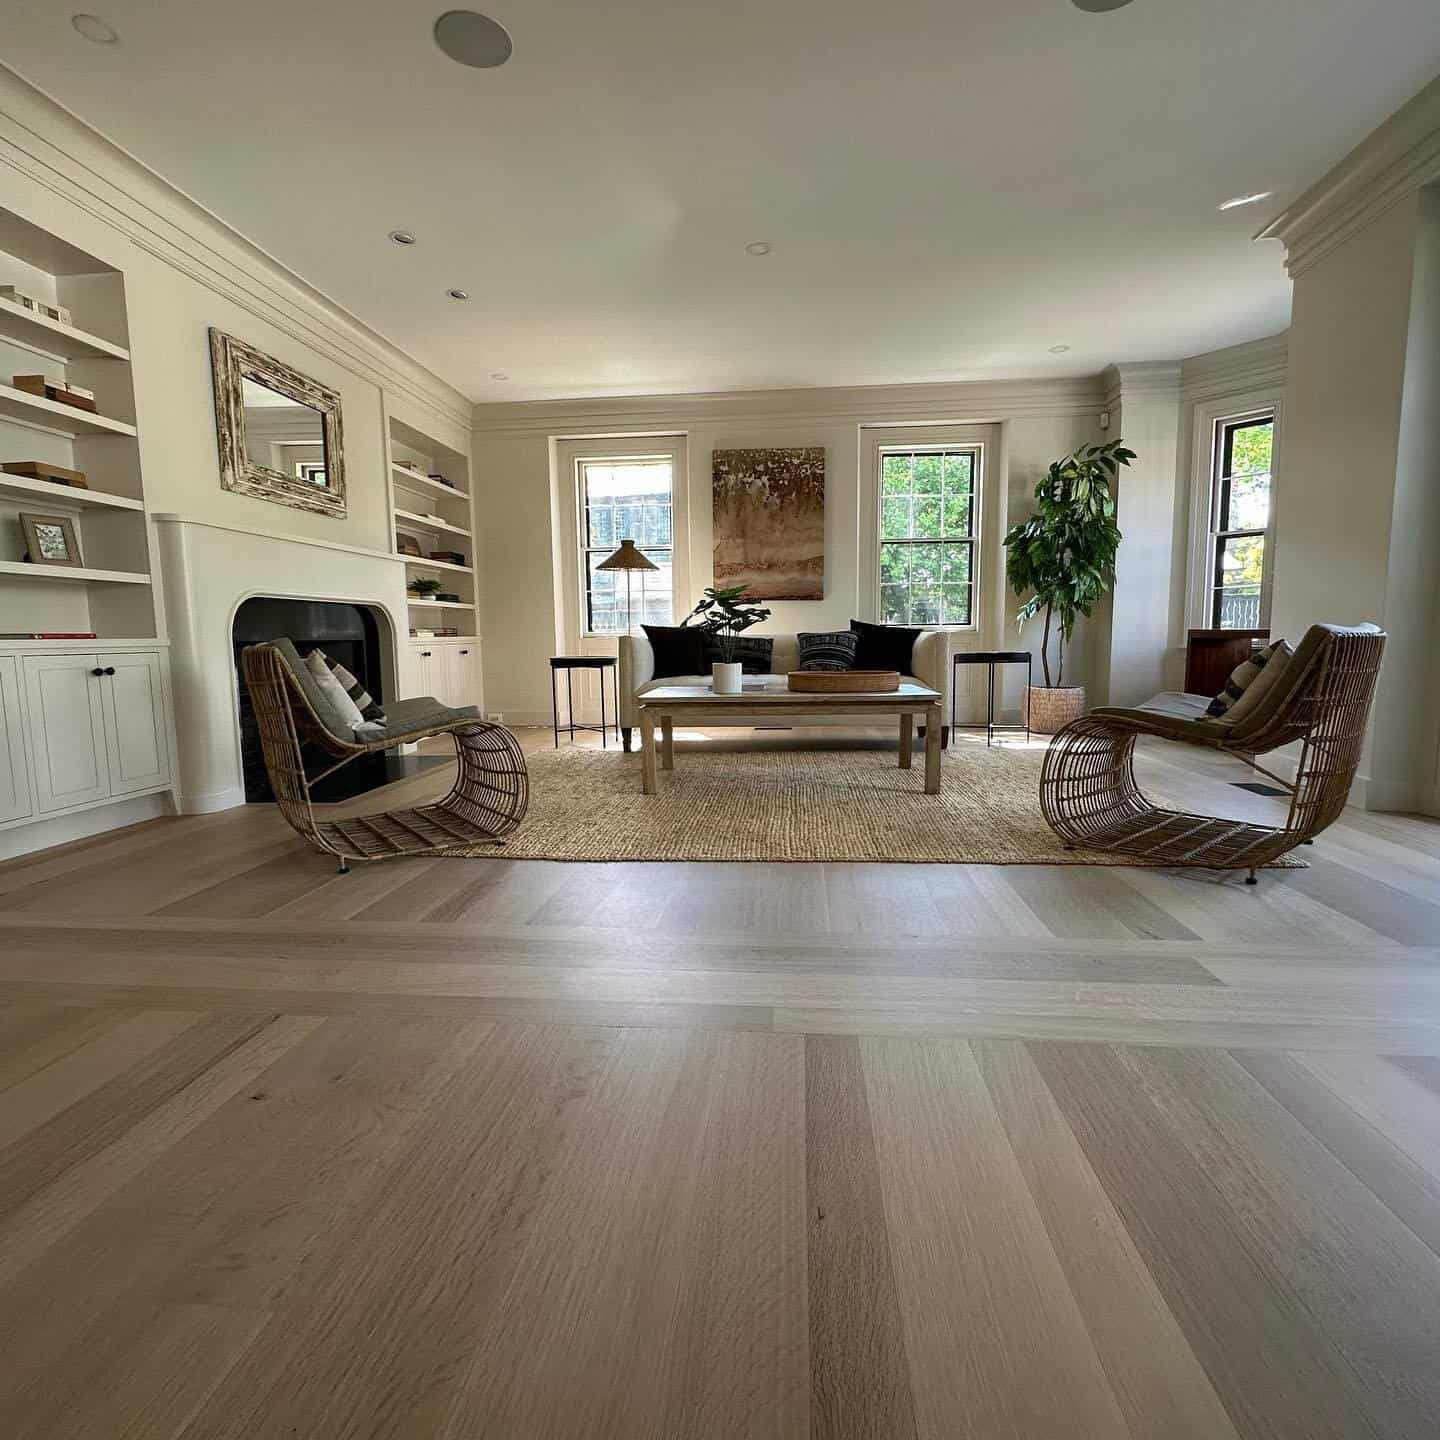 hardwood floors refinished by Eco Floor sanding- serving Brookline MA